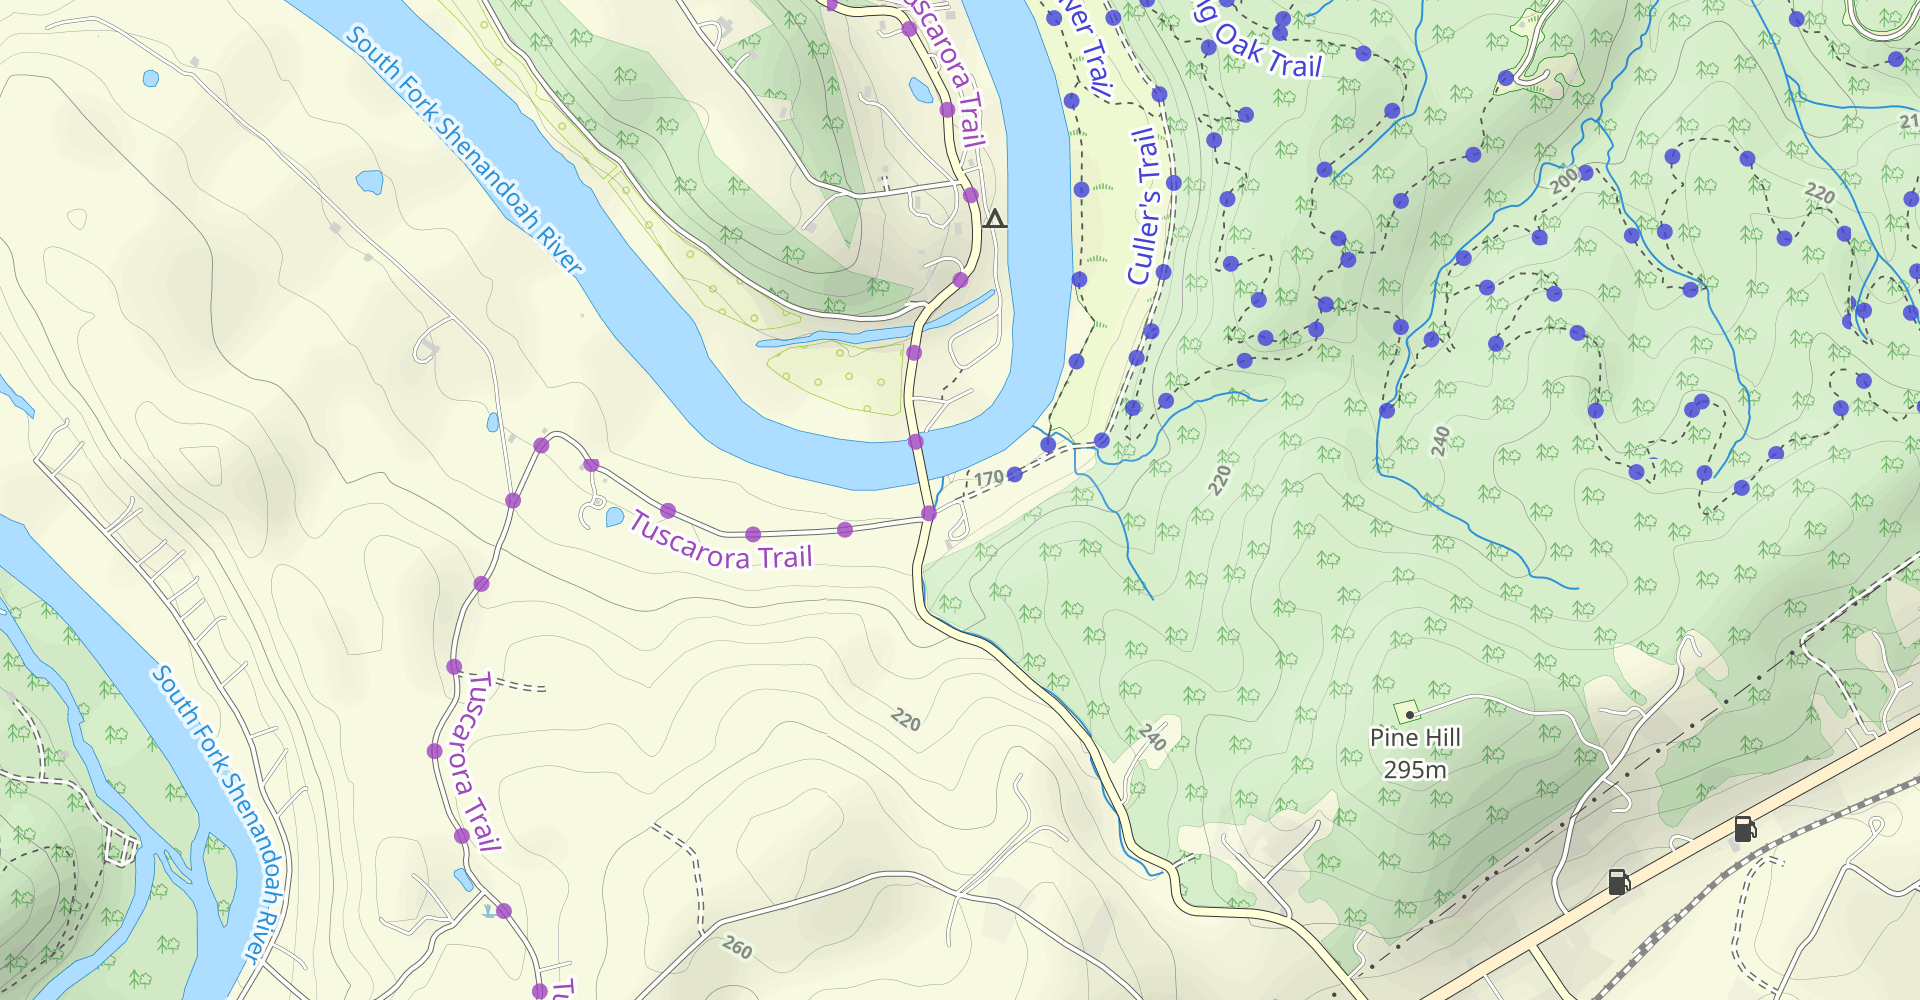 shenandoah river map